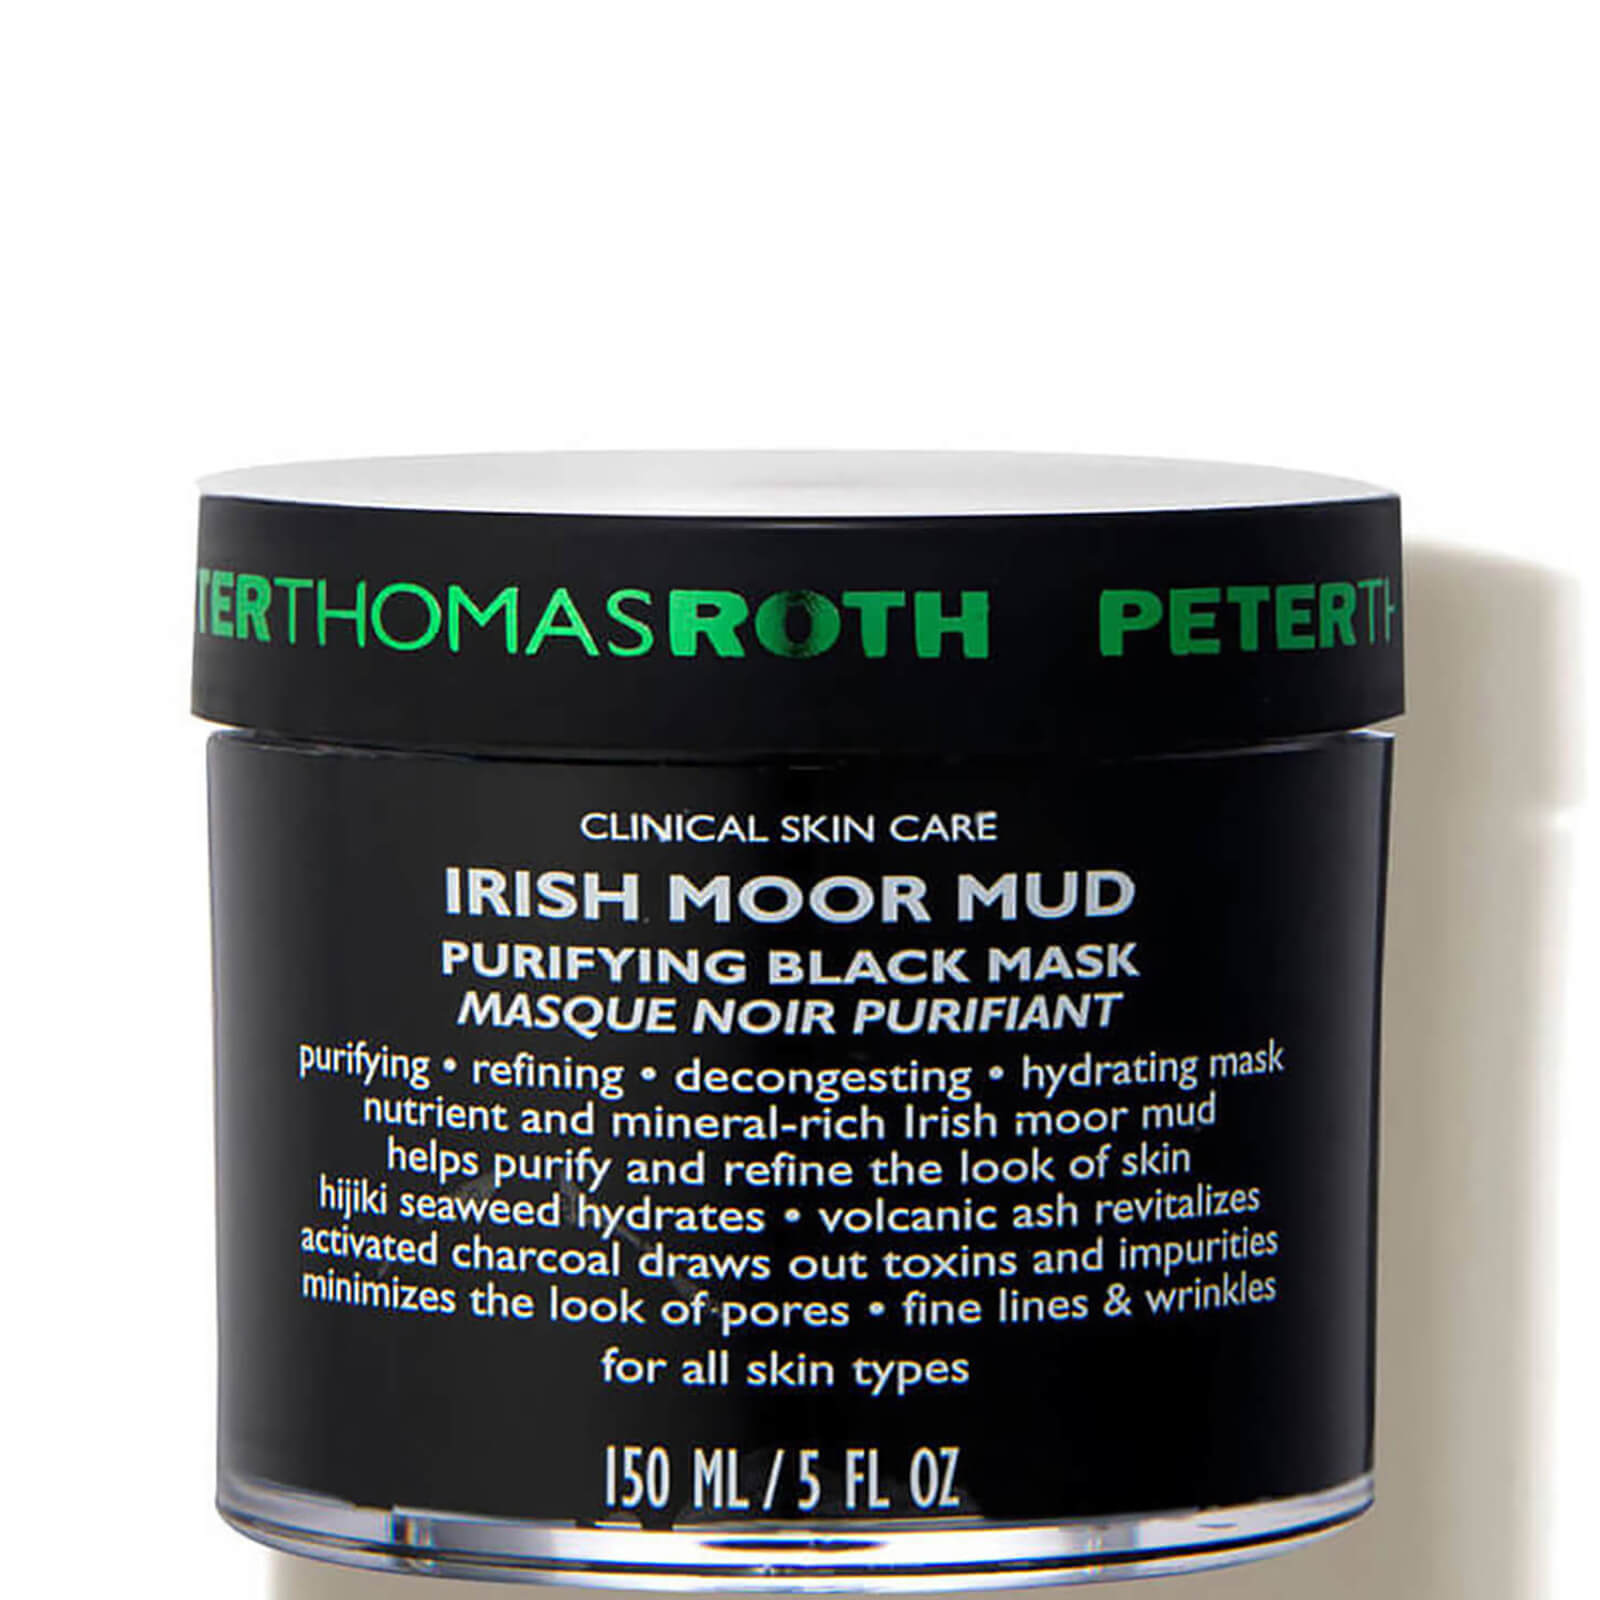 Peter Thomas Roth maschera Purifying ai fanghi della brughiera irlandese